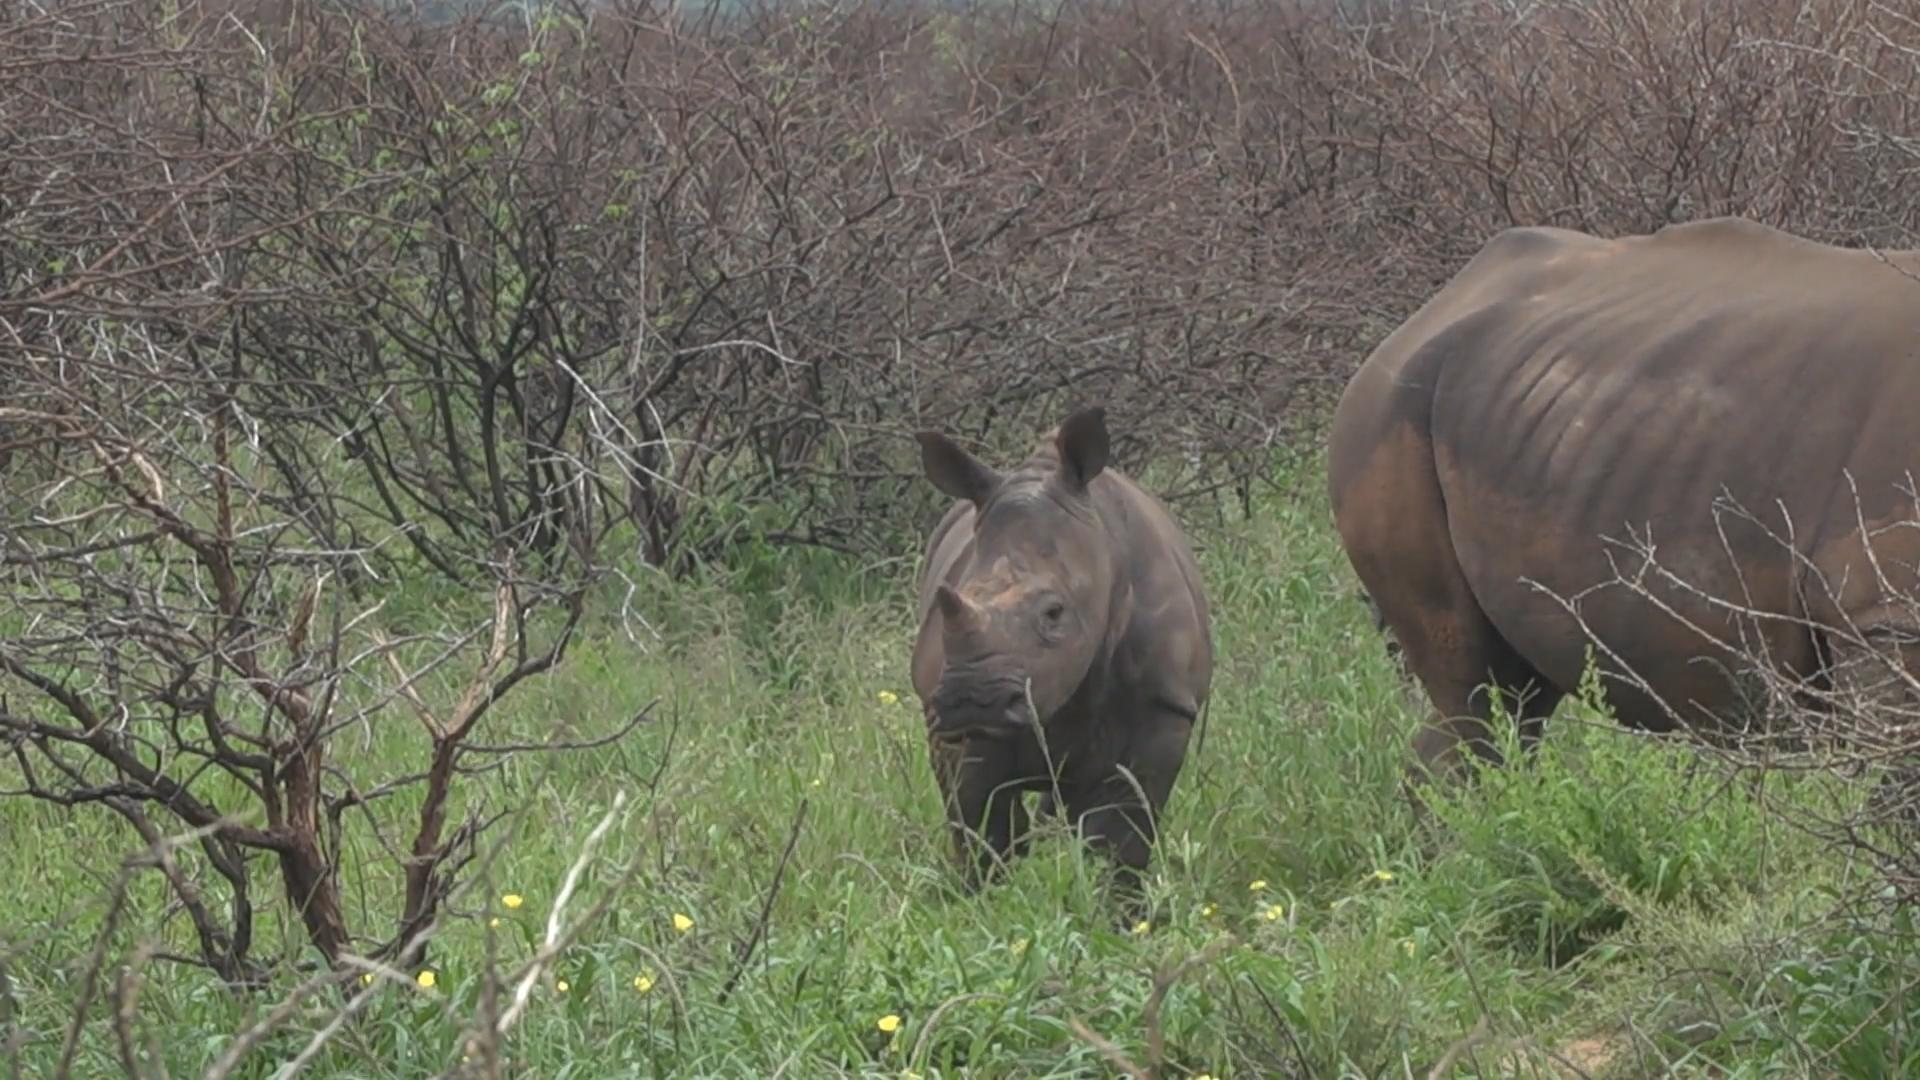 Corona-Krise gefährdet Nashörner Südliches Afrika: